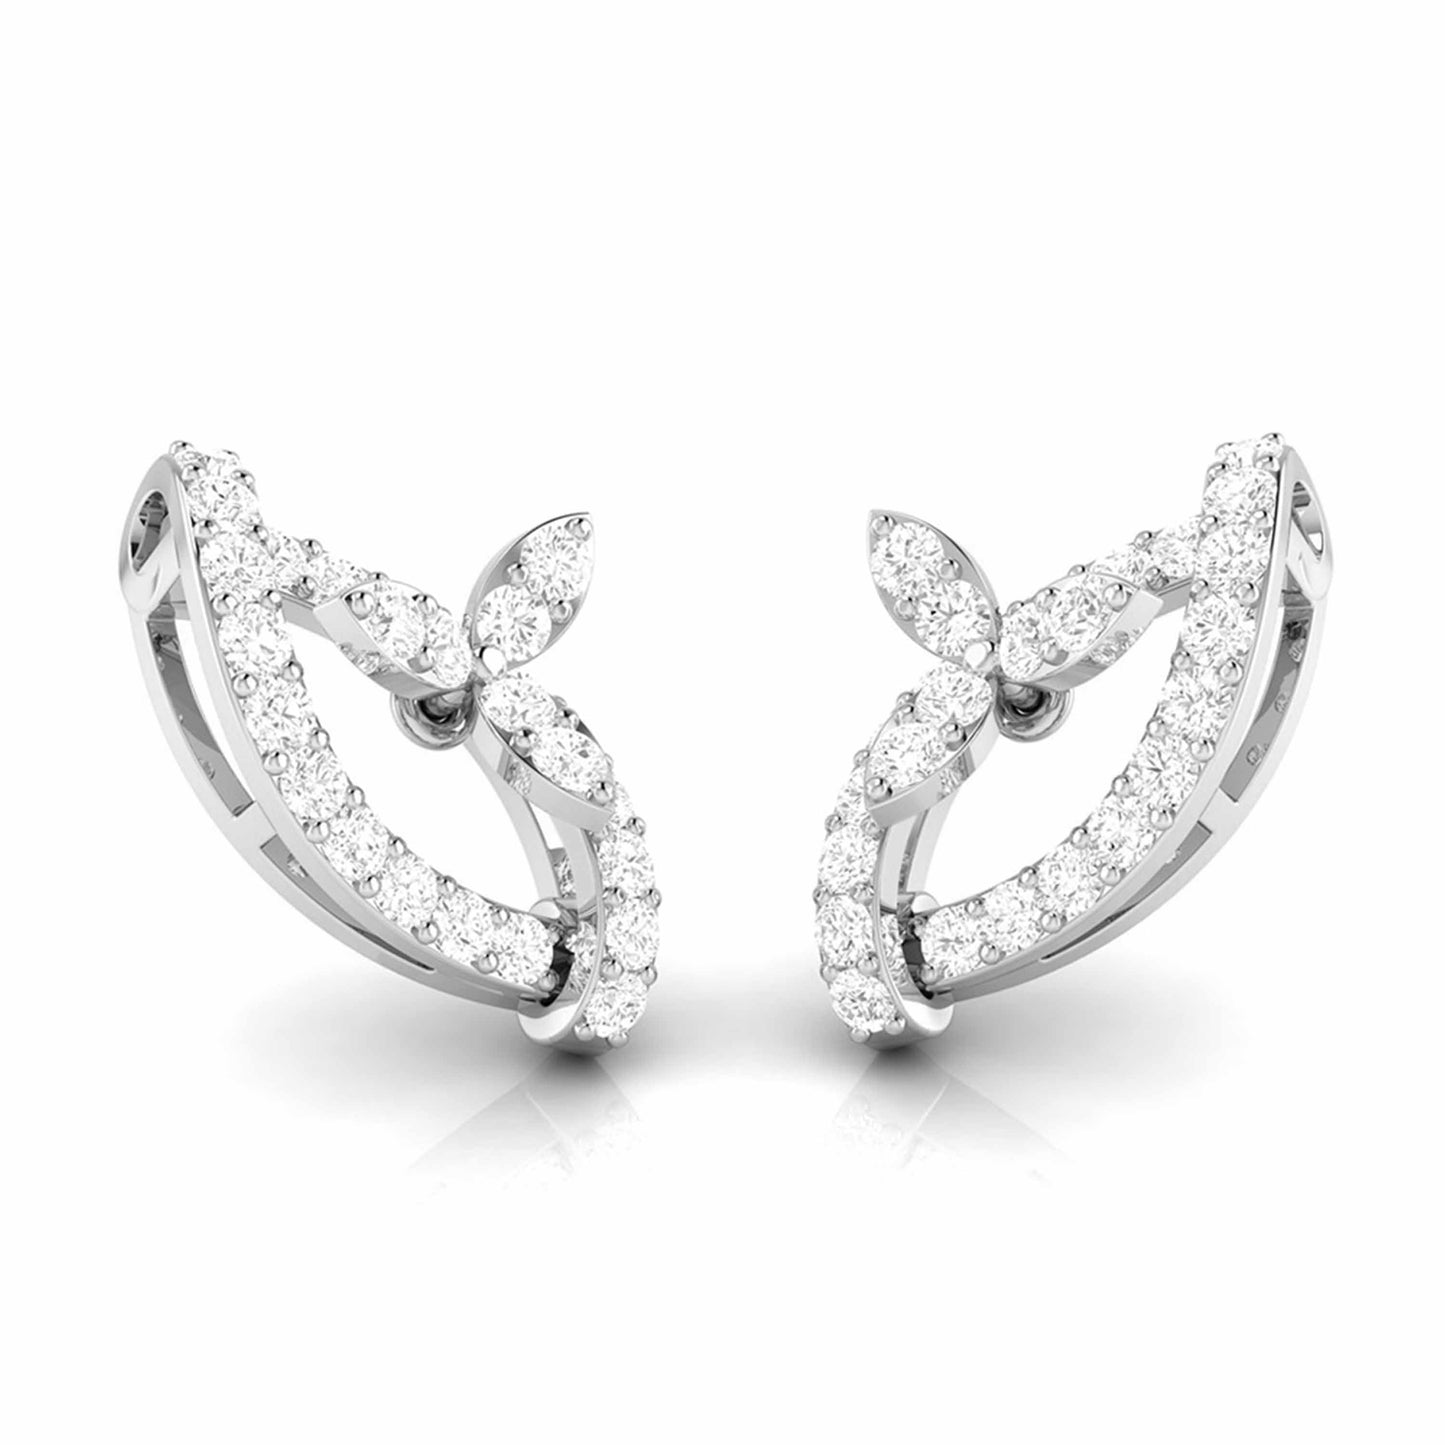 Small earrings design Elongated Lab Grown Diamond Earrings Fiona Diamonds